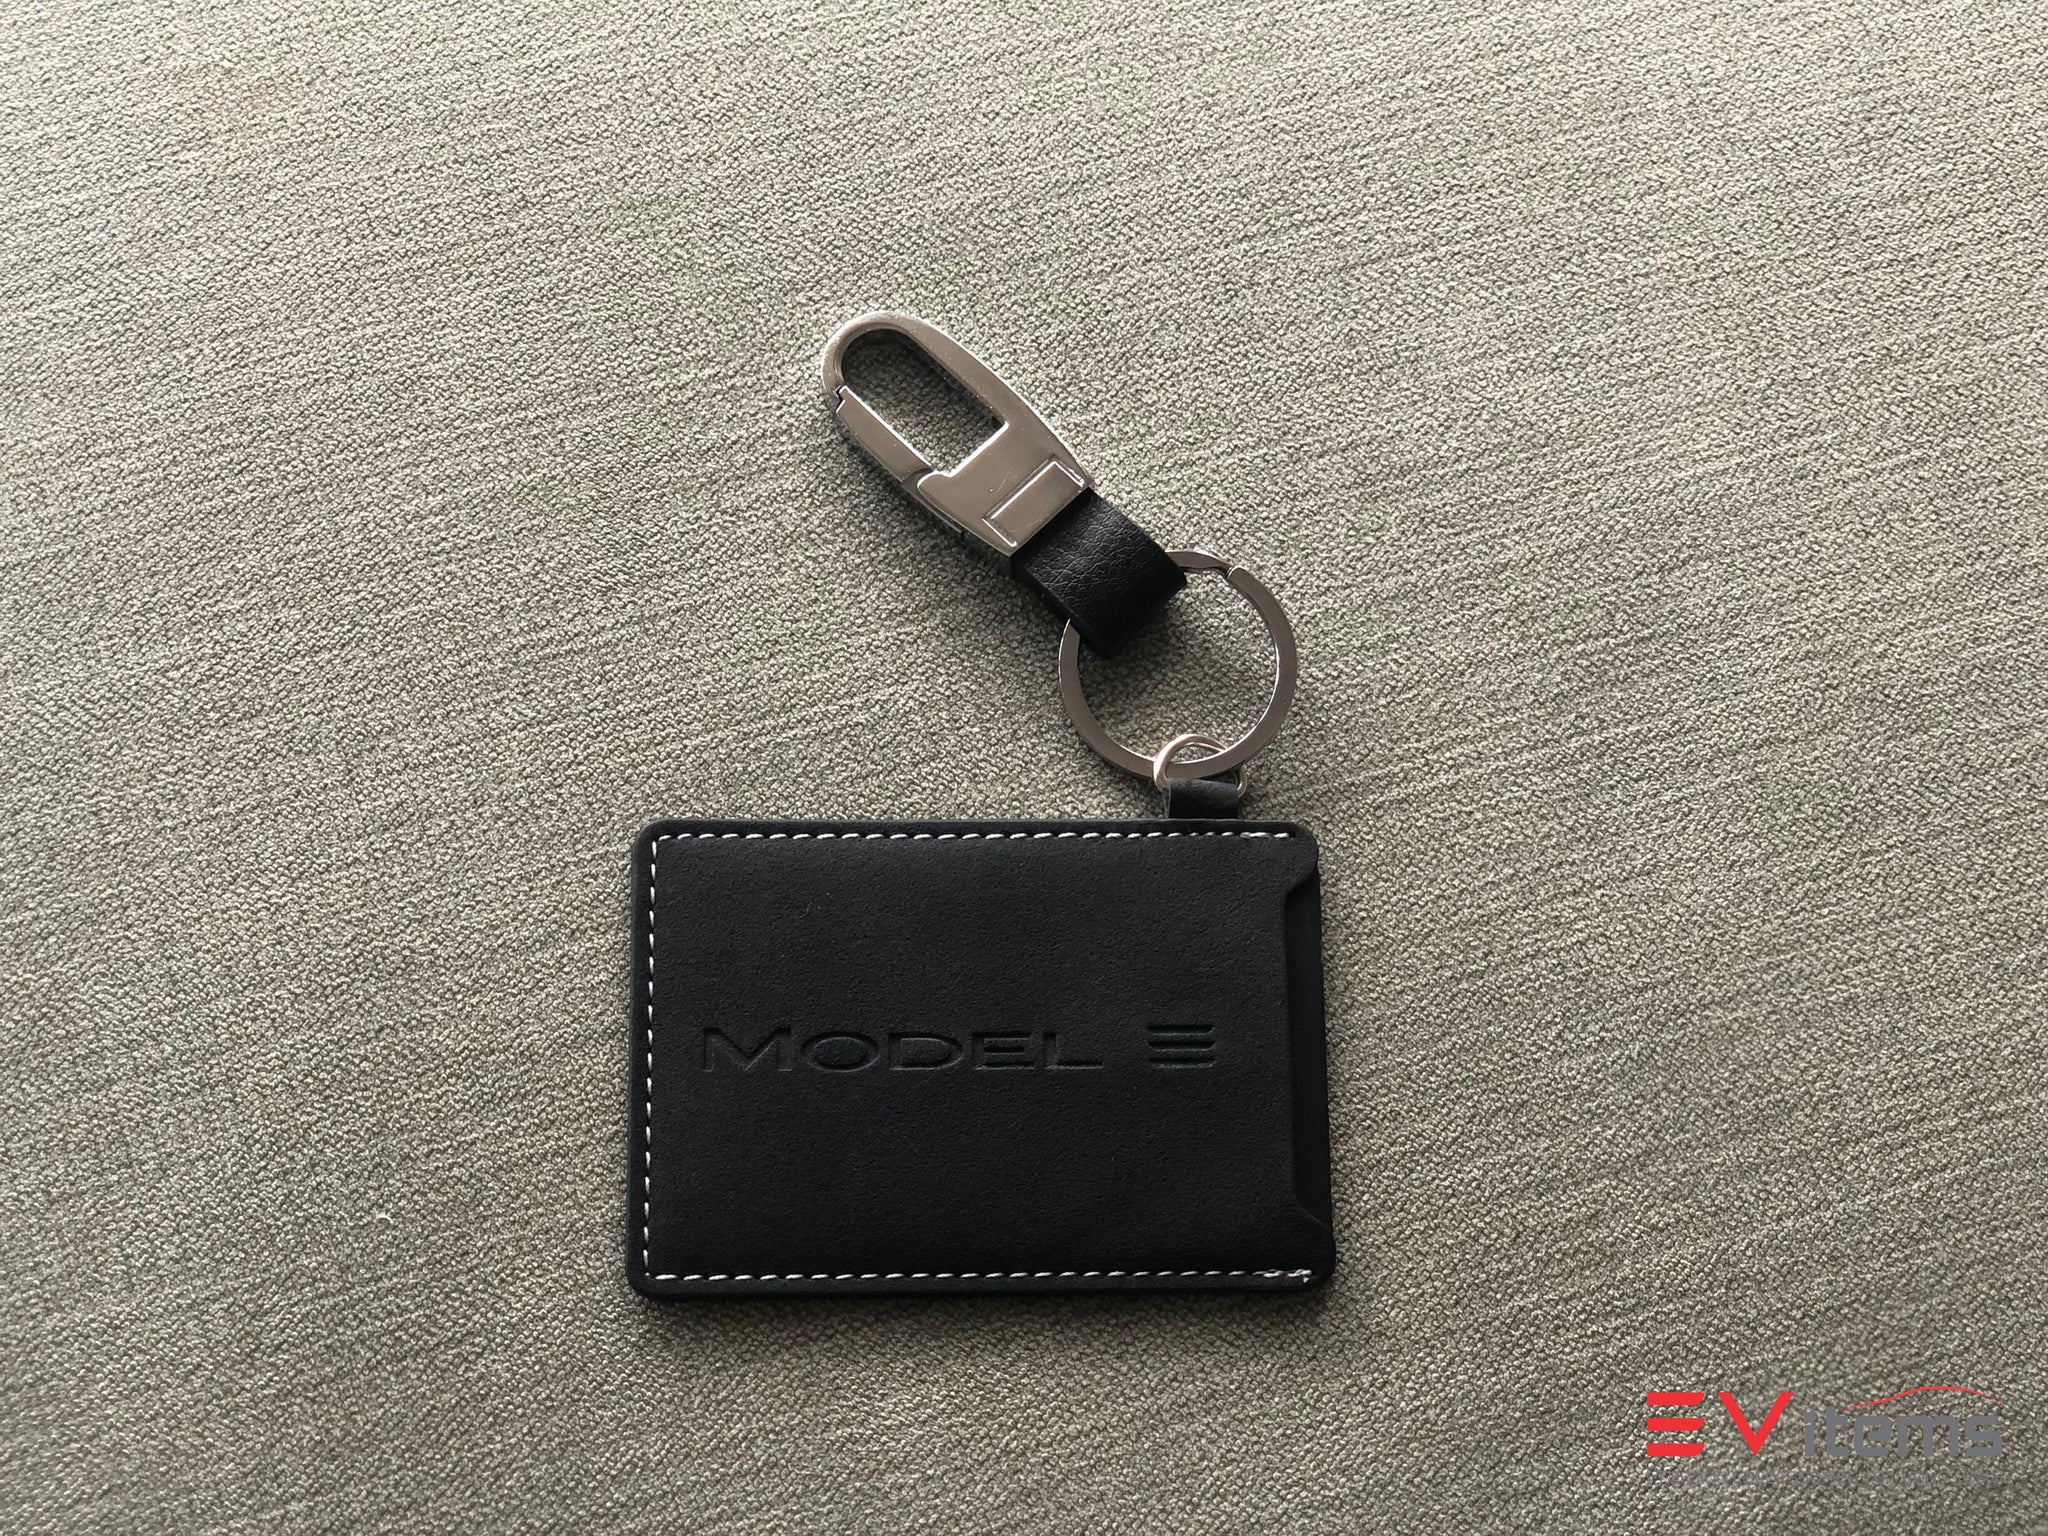 Alcantara Key Card Holder For Tesla Model 3/Y (2017-2023)-EVAAM®